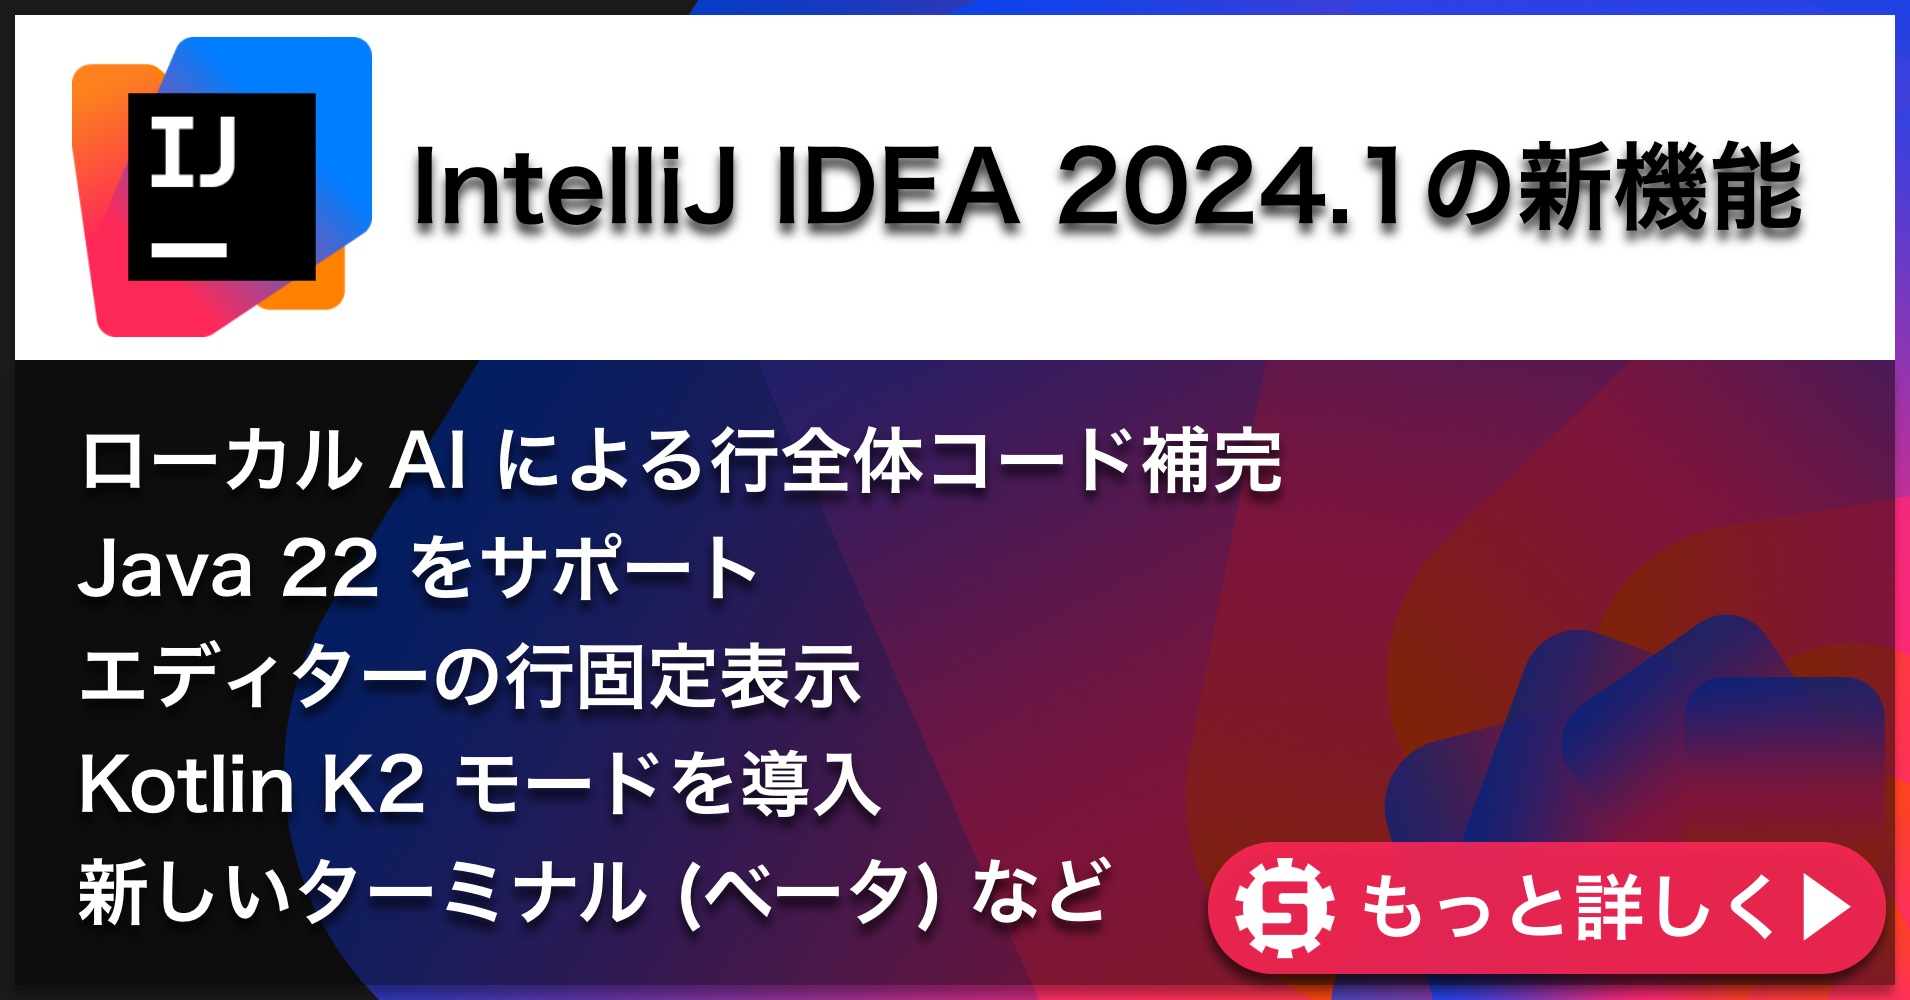 IntelliJ IDEA 2024.1の新機能